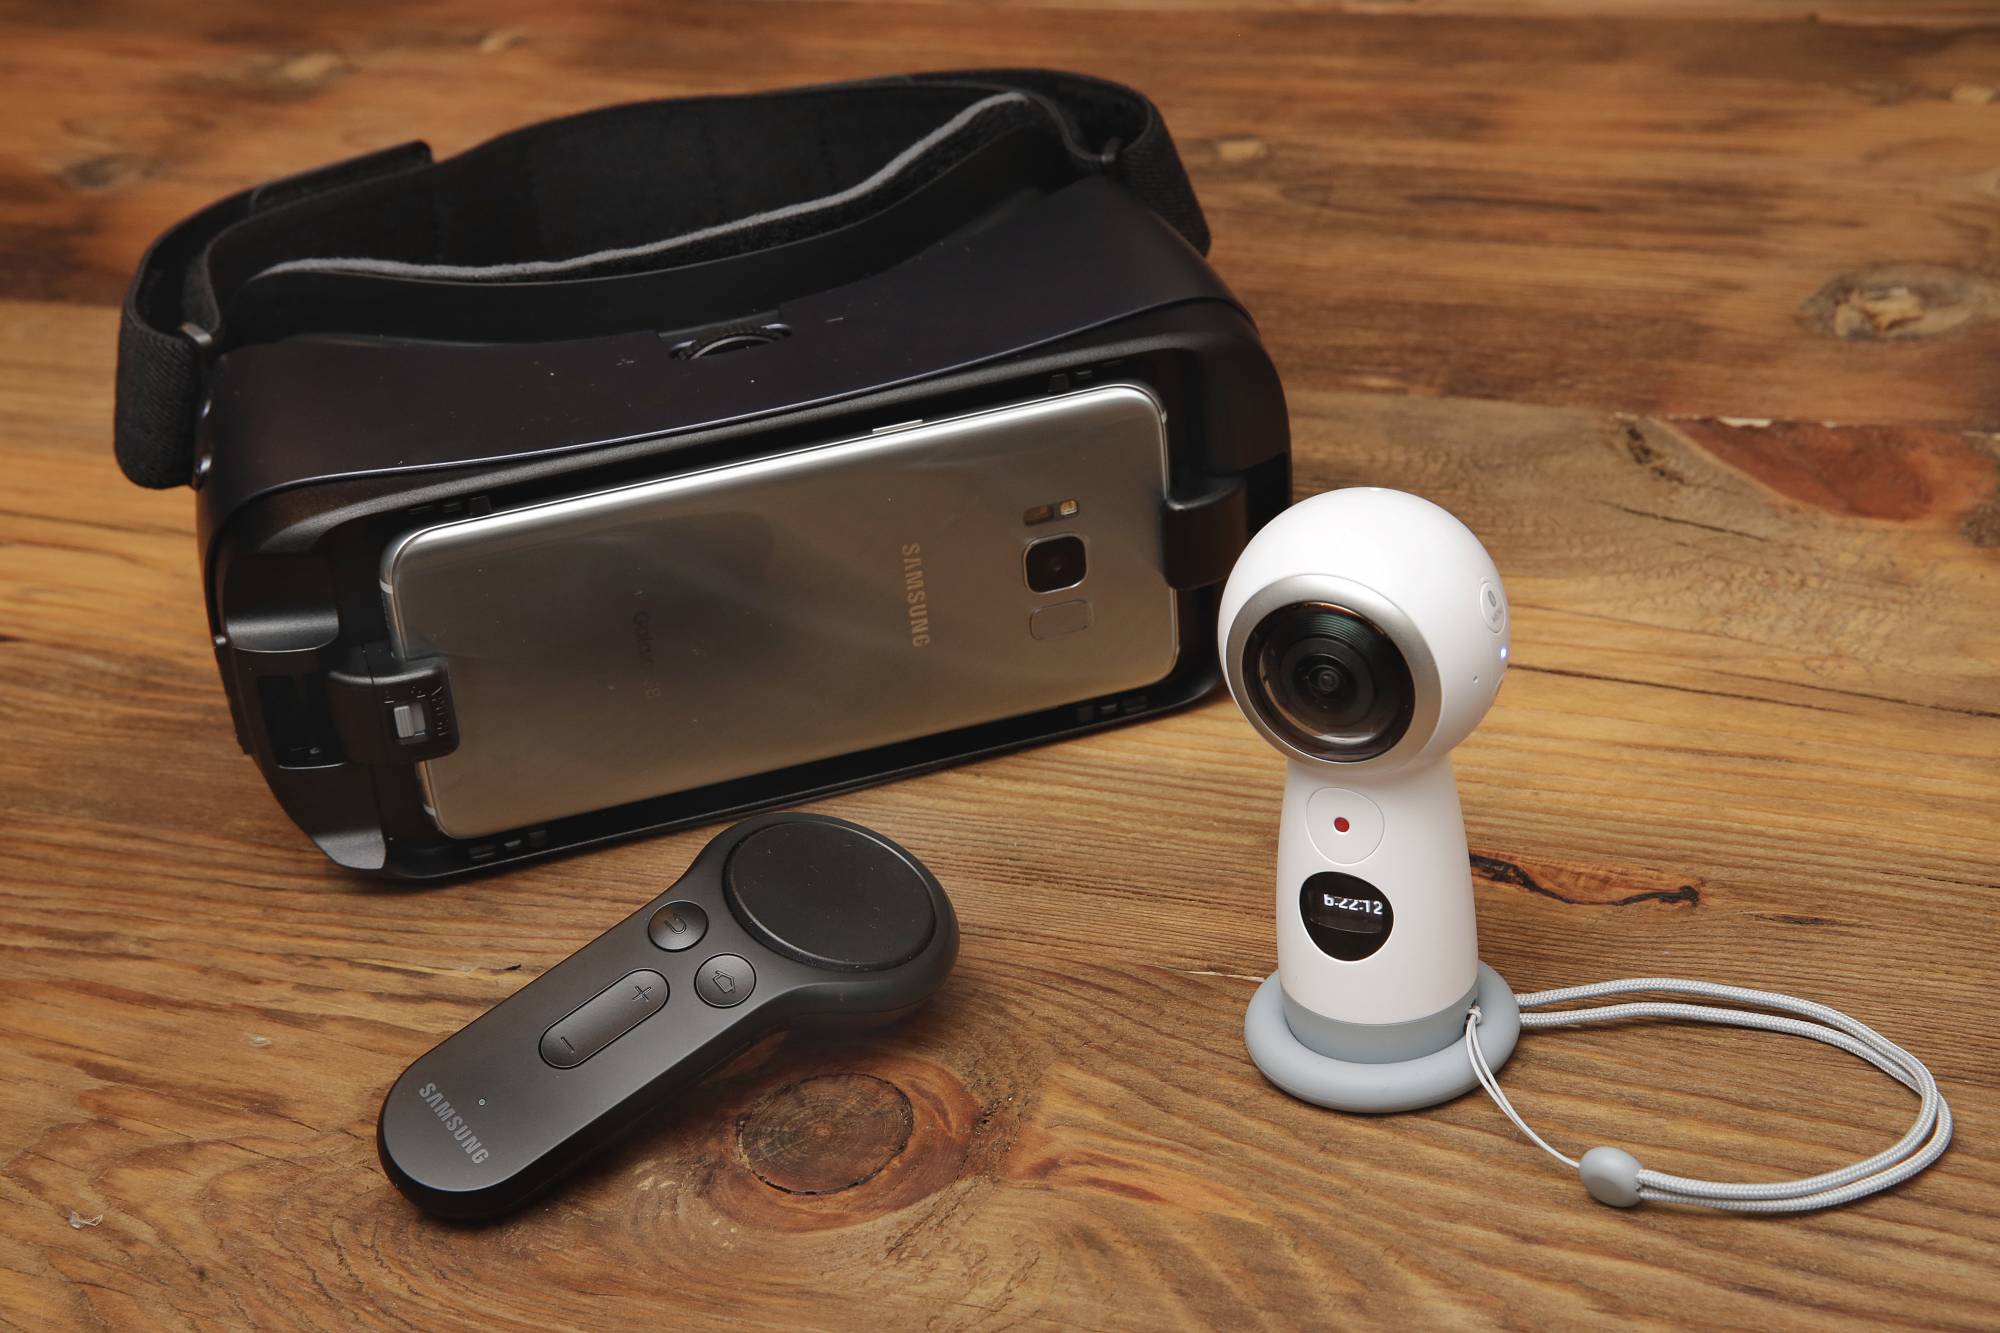 Gear 360 camera, Gear VR headset